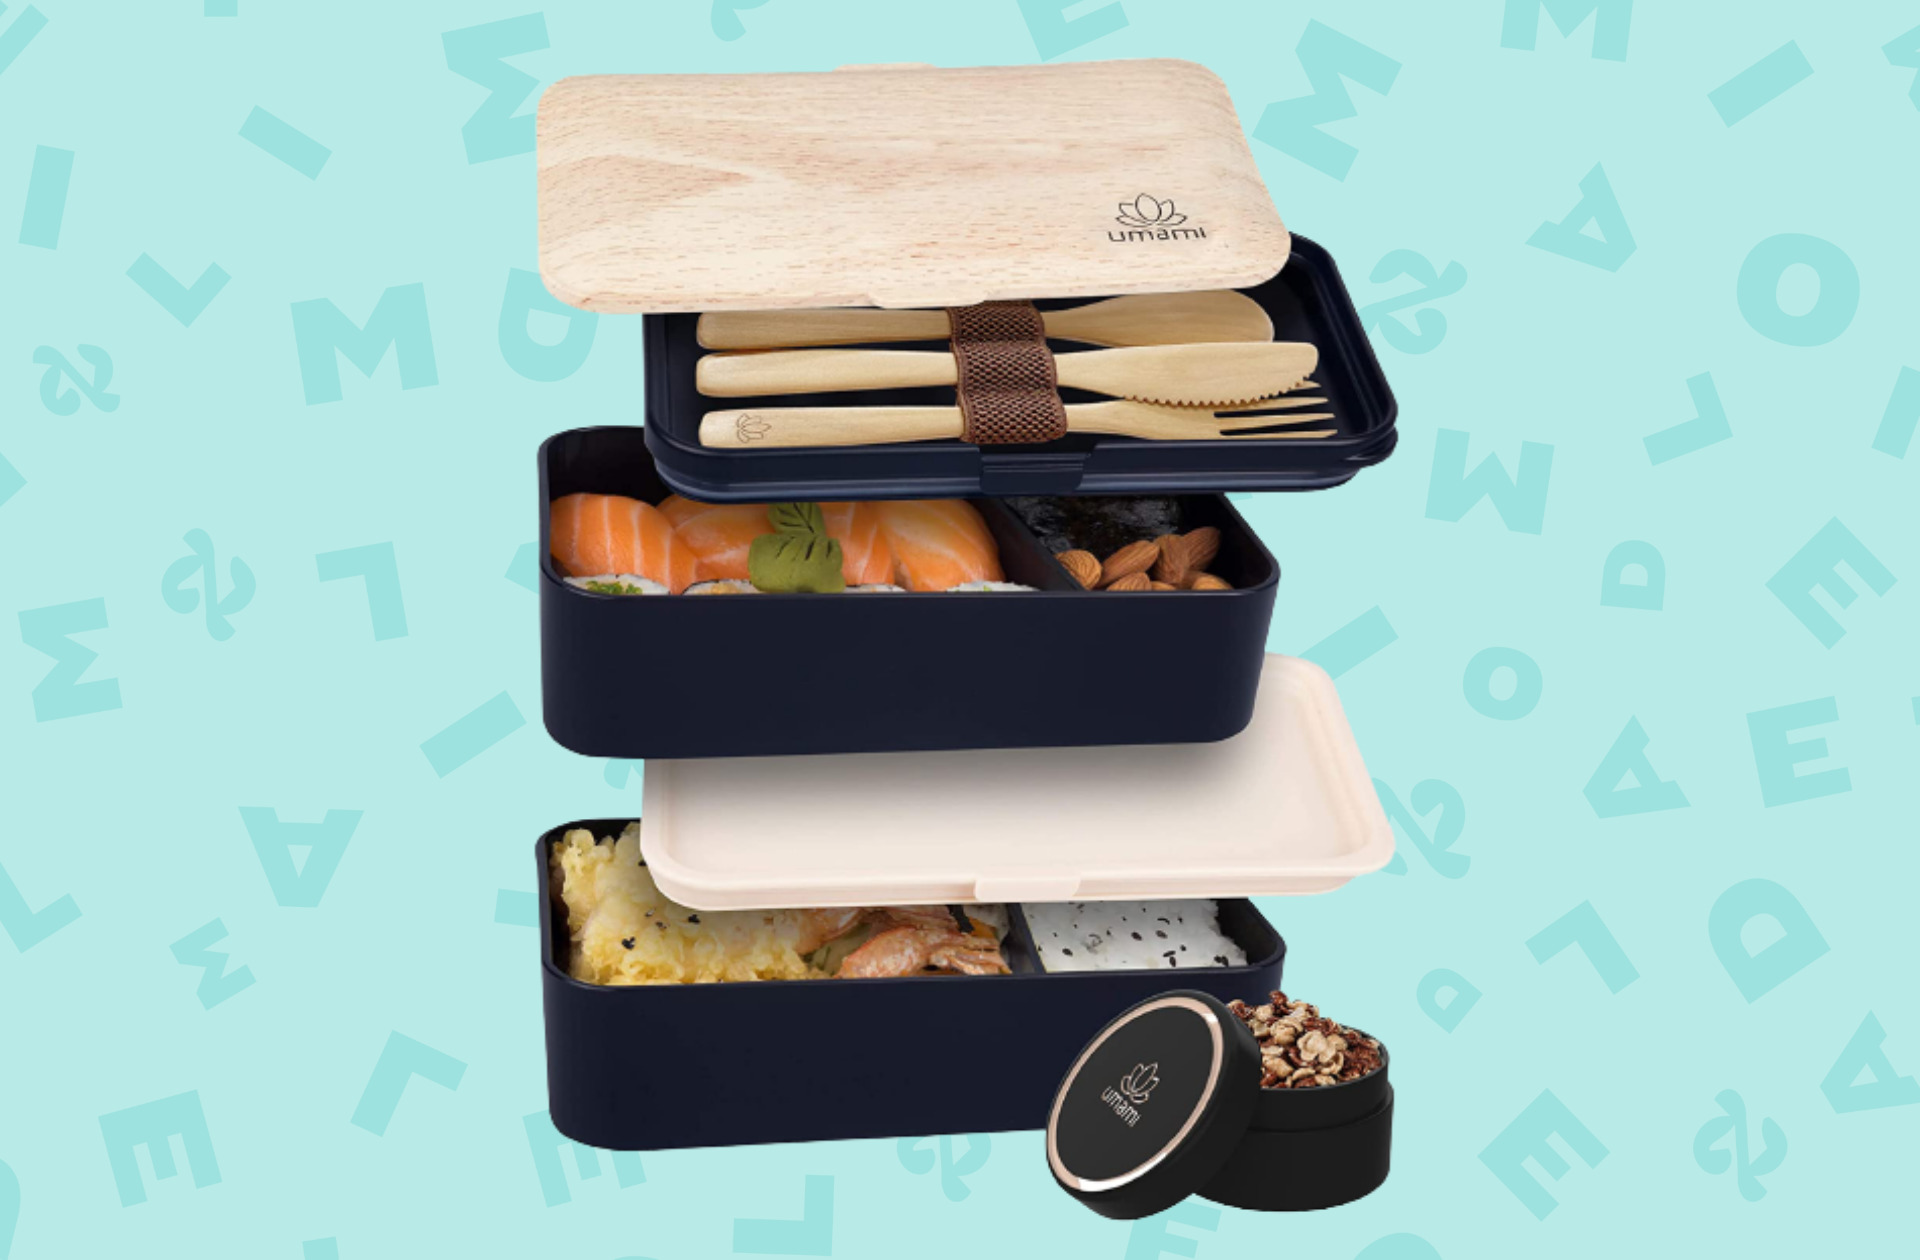 Umami Lunch Box - Bento Lunch Box Tout-en-1, Boite Repas avec